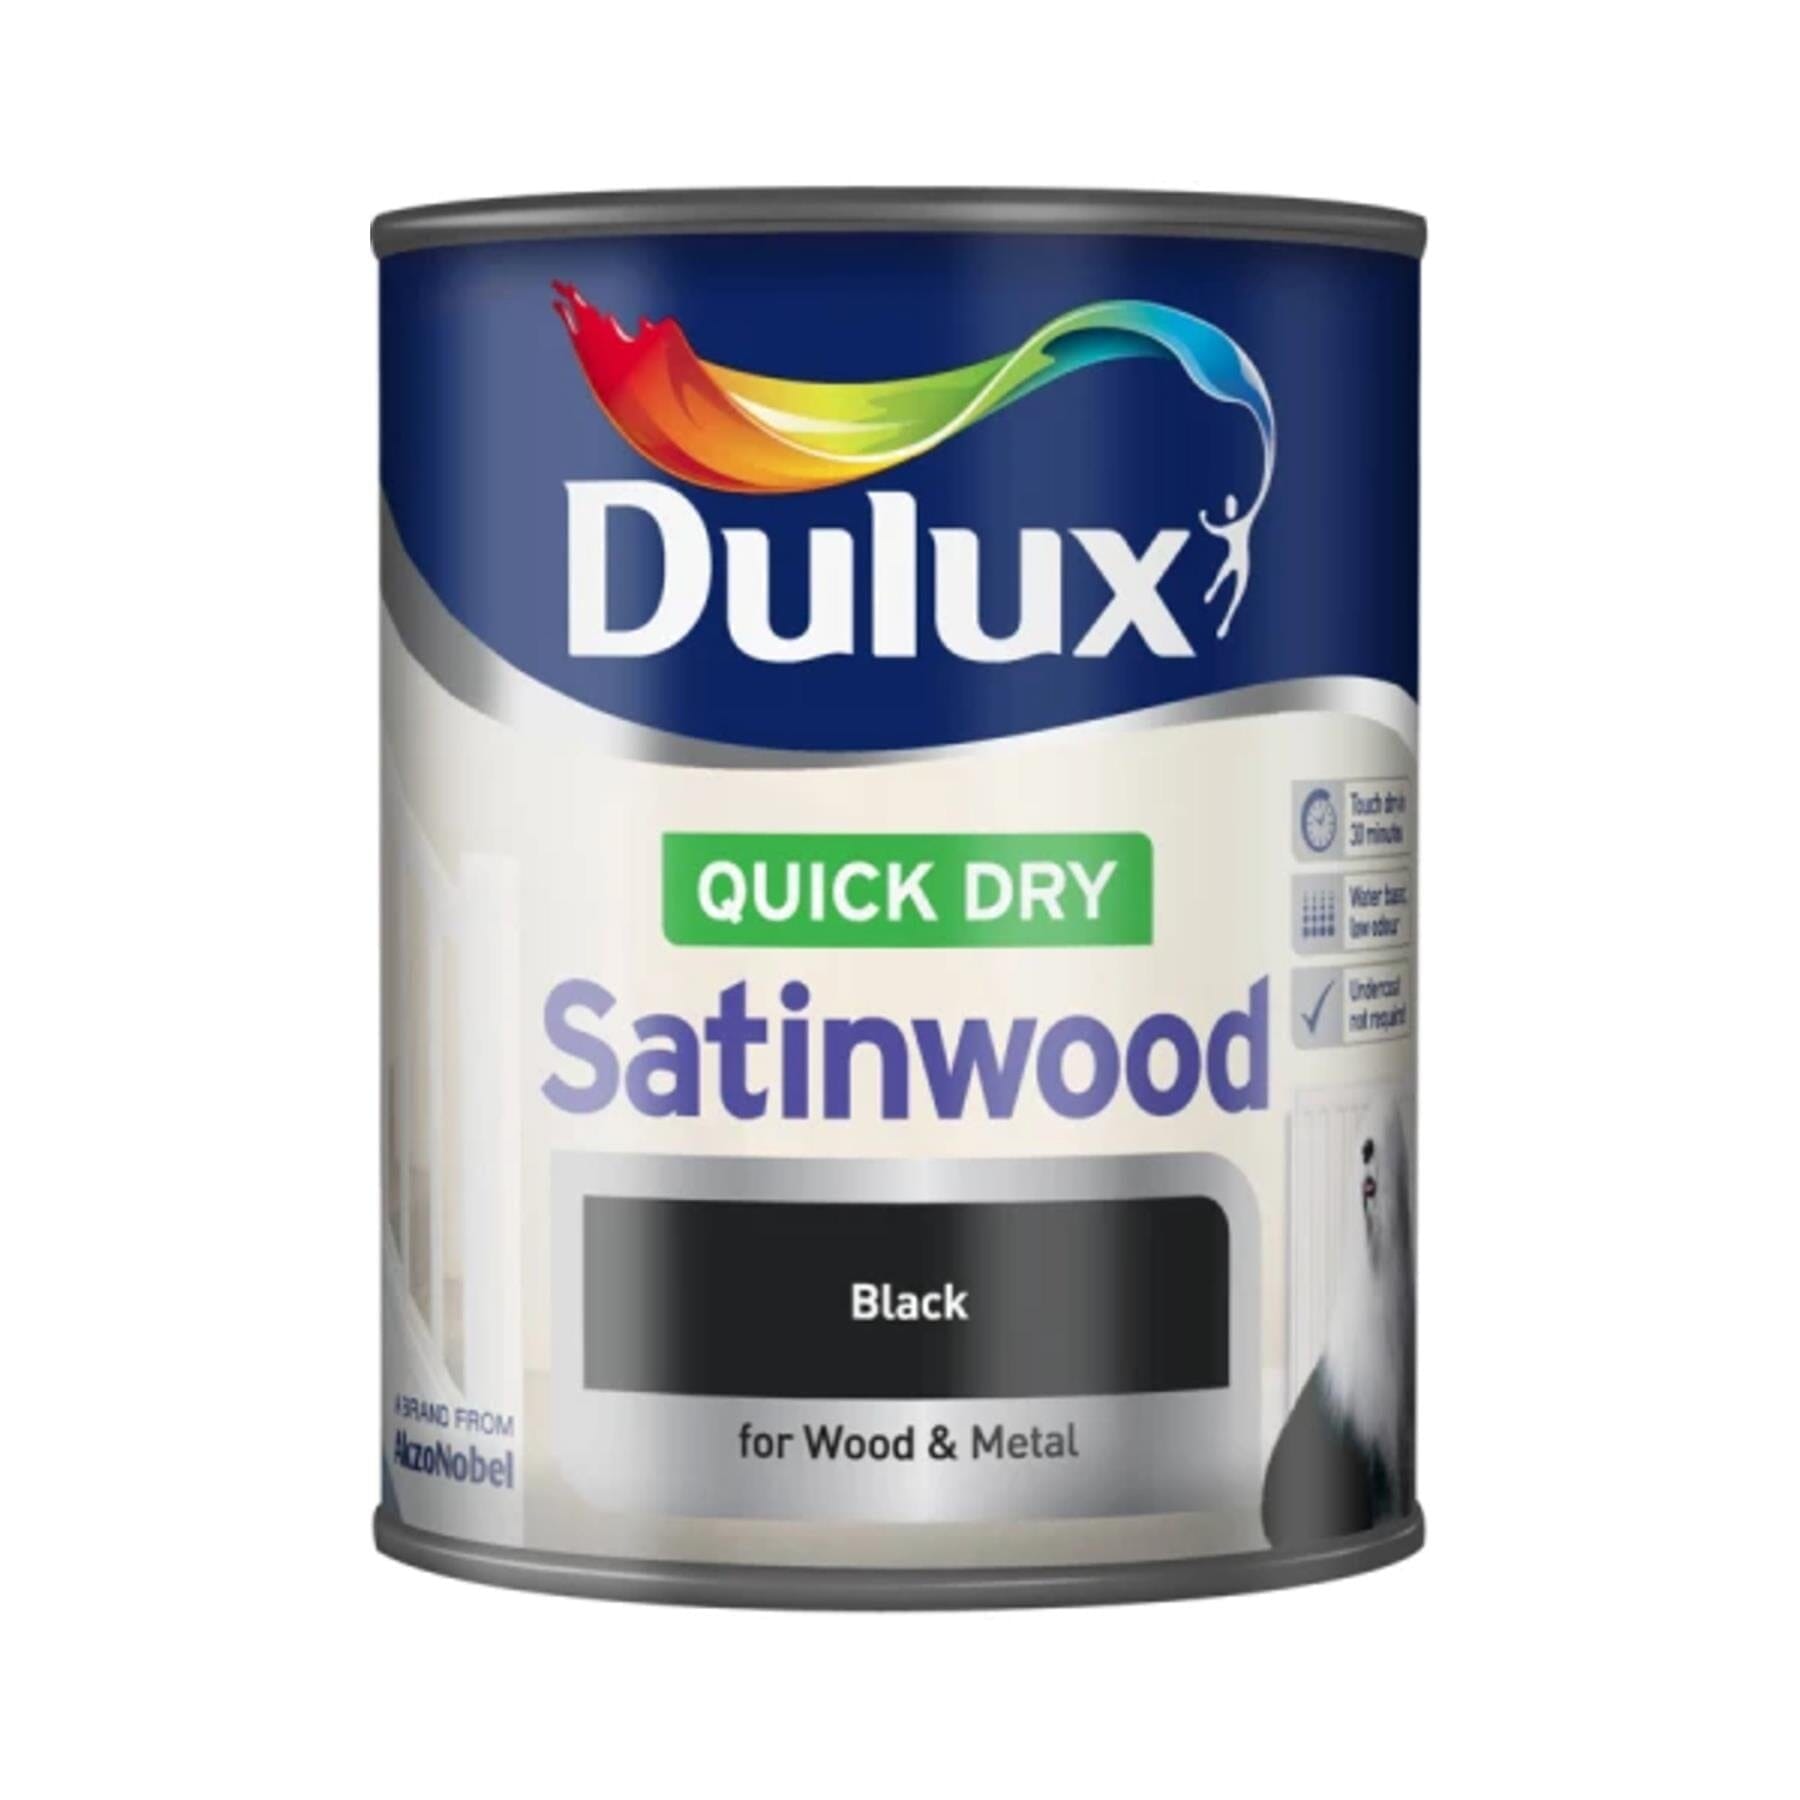 Dulux Quick Dry Satinwood Black 750ml Wood & Metal Paints | Snape & Sons